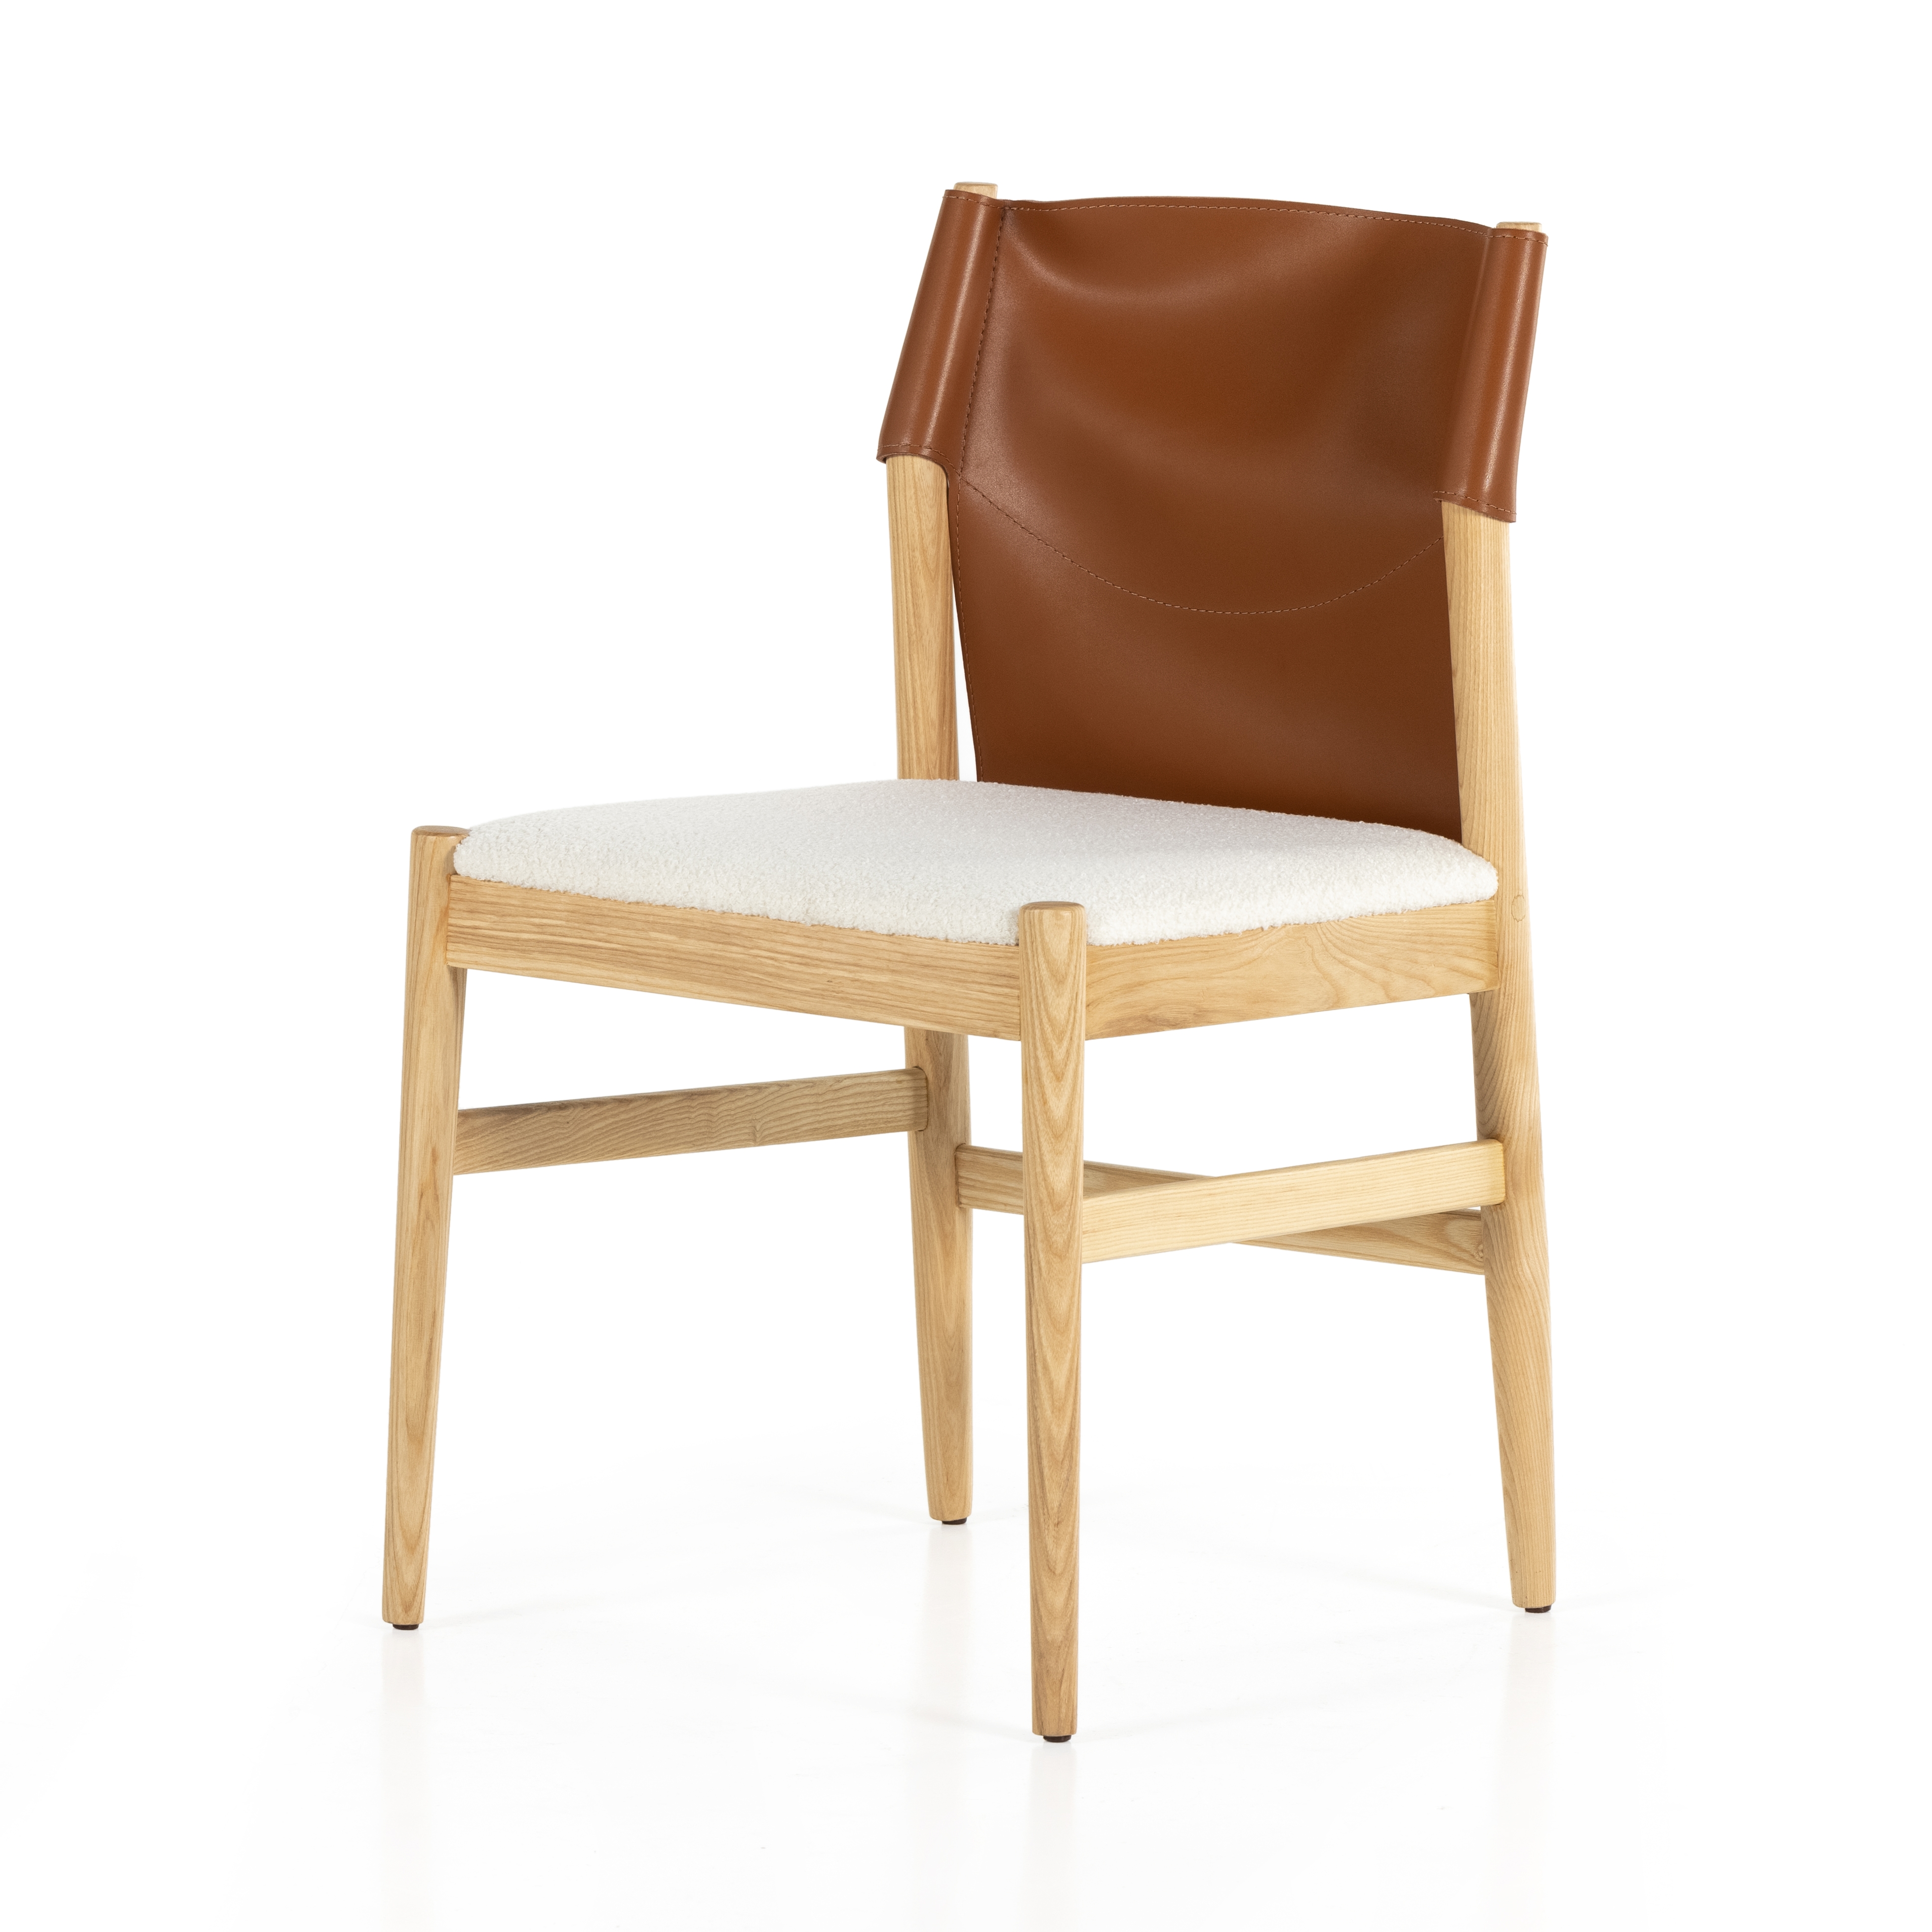 Lulu Armless Dining Chair-Saddle Leather - Image 0